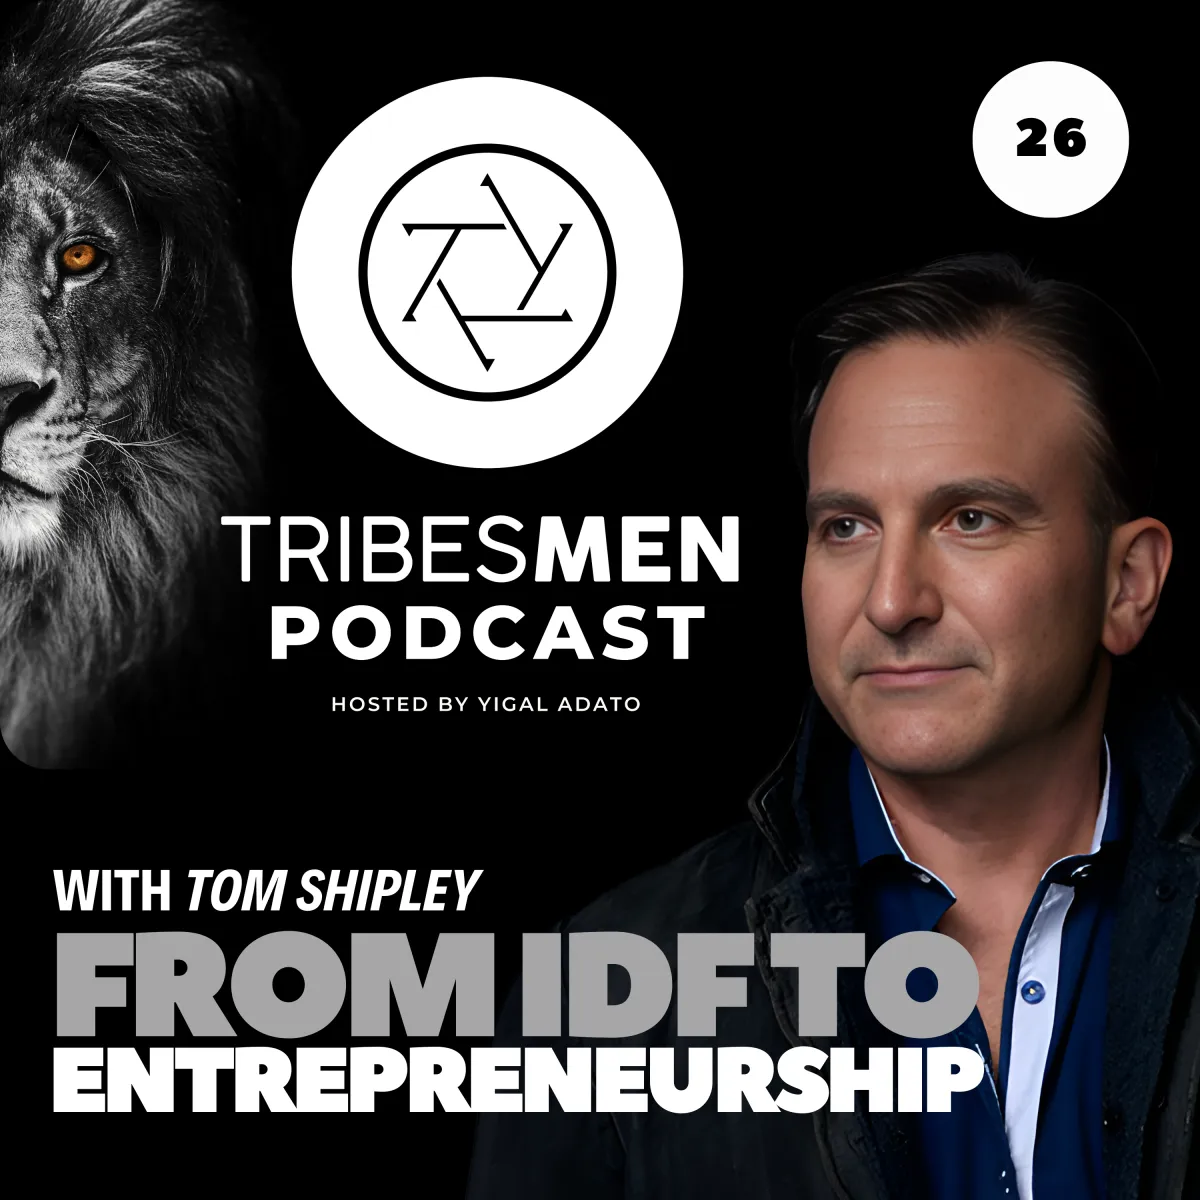 Tribesmen Podcast with Tom Shipley From IDF to Entrepreneurship